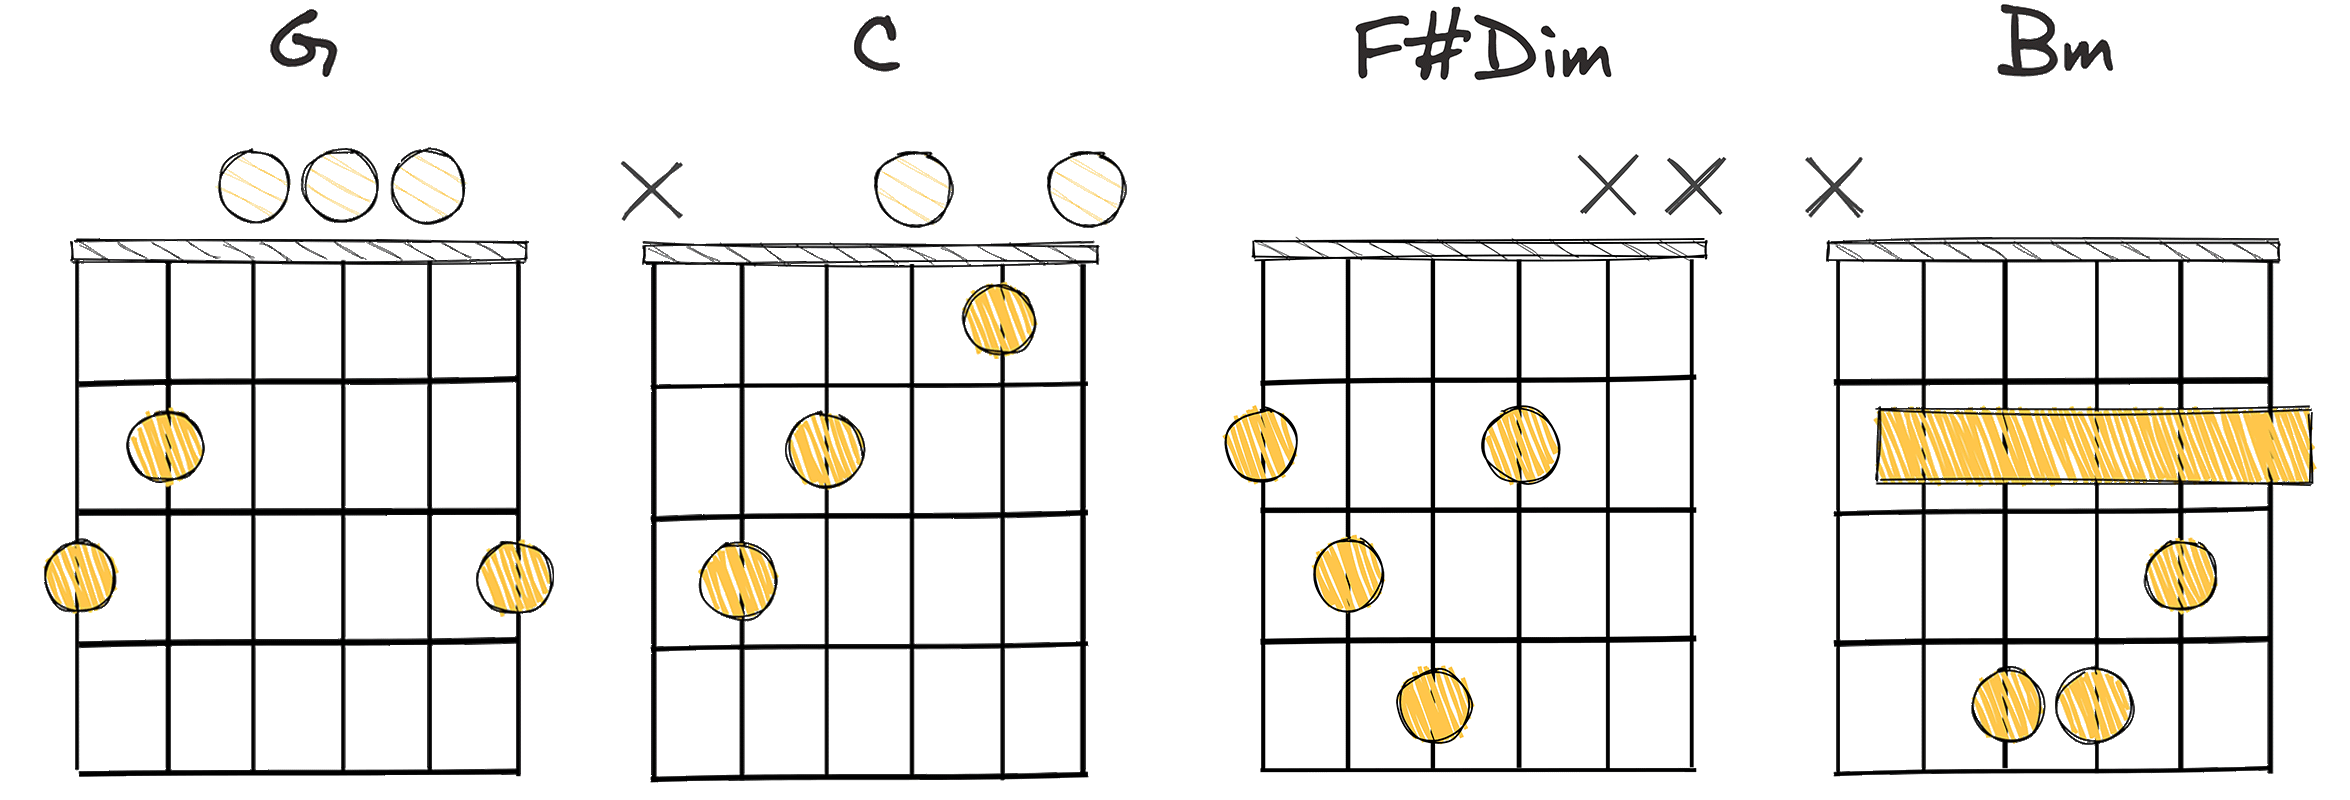 I-IV-vii°-iii (1-4-7-3) chords diagram